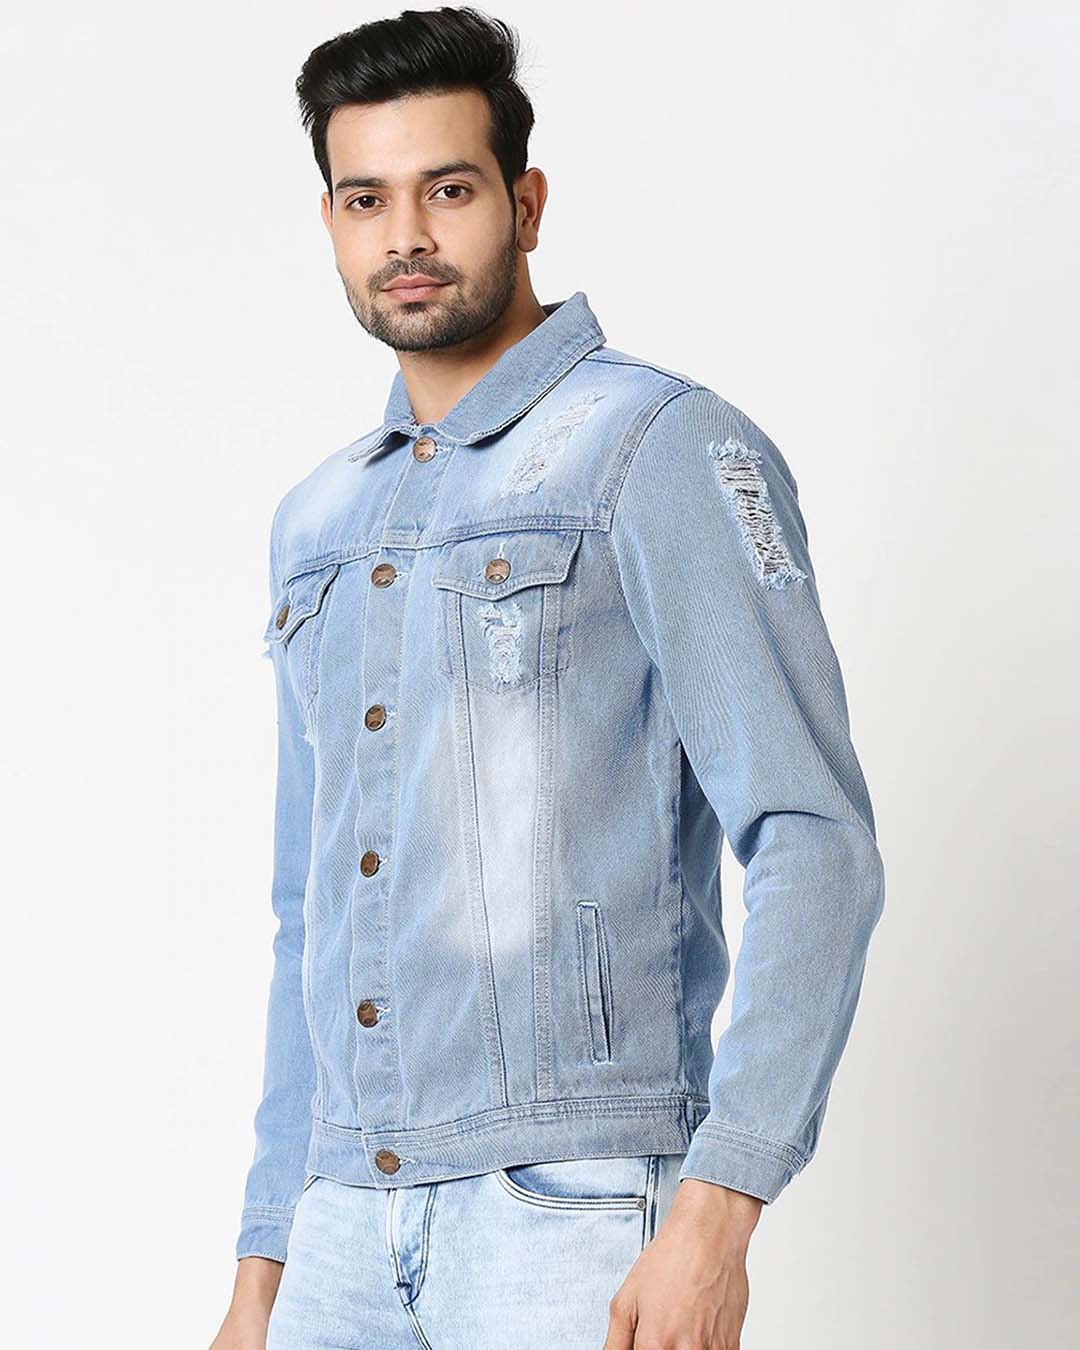 XL High star Denim Jacket at Rs 600/piece in Mumbai | ID: 16566510497